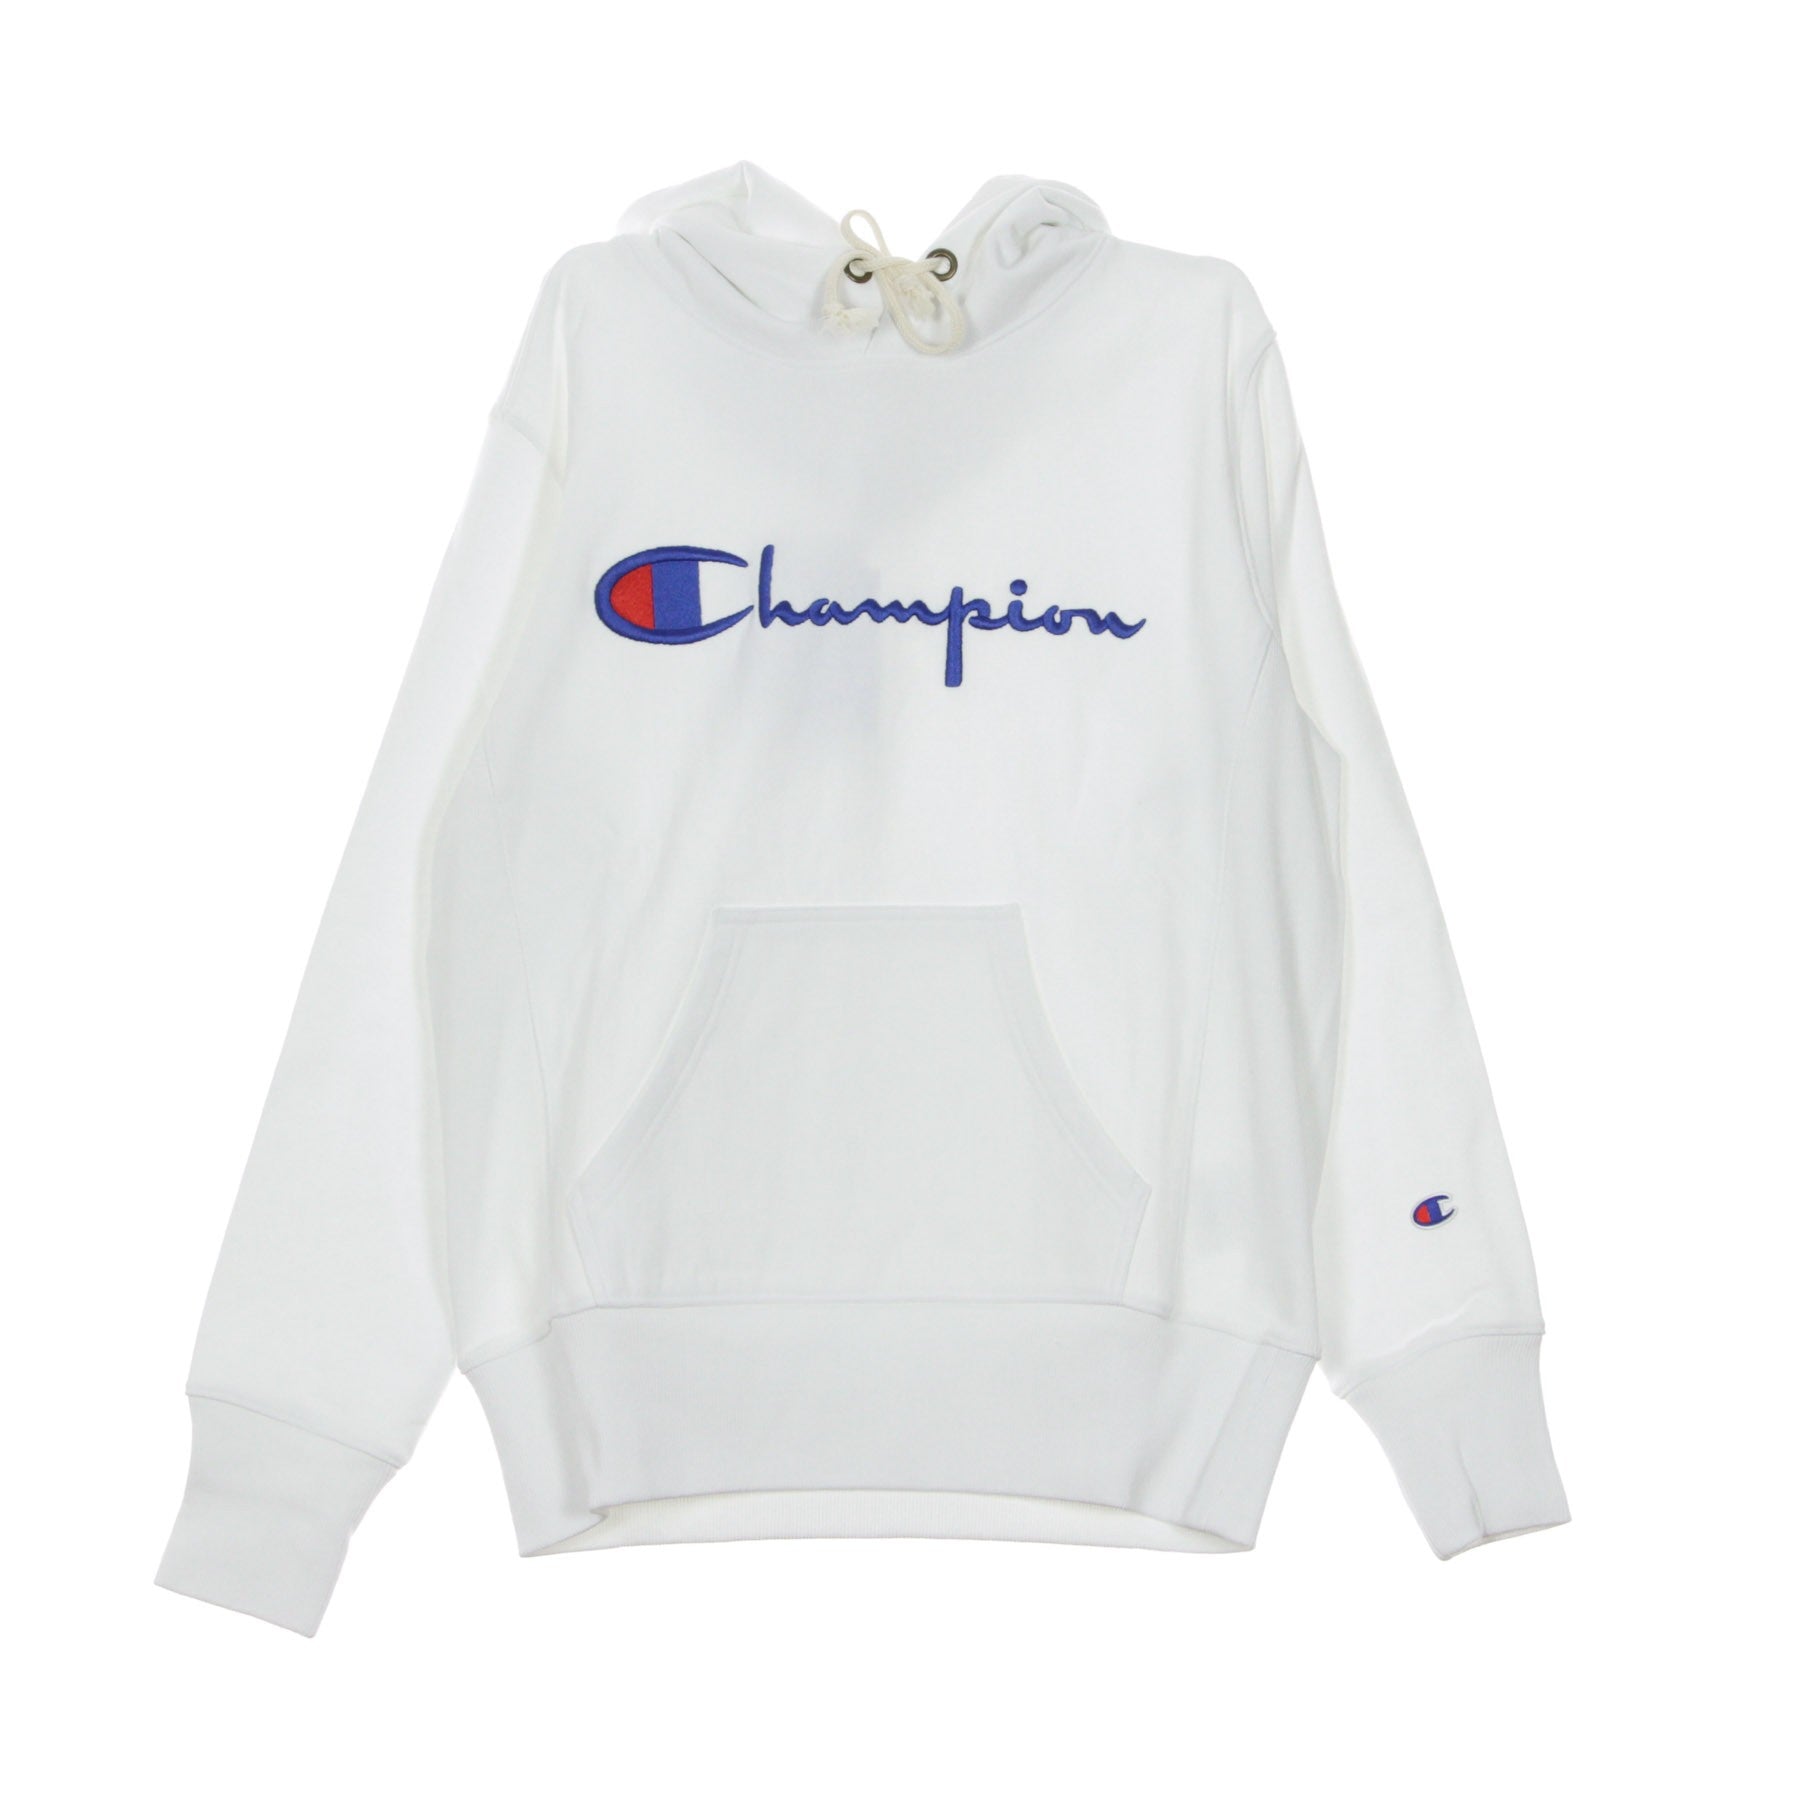 Champion, Felpa Cappuccio Uomo Hooded Sweatshirt, White